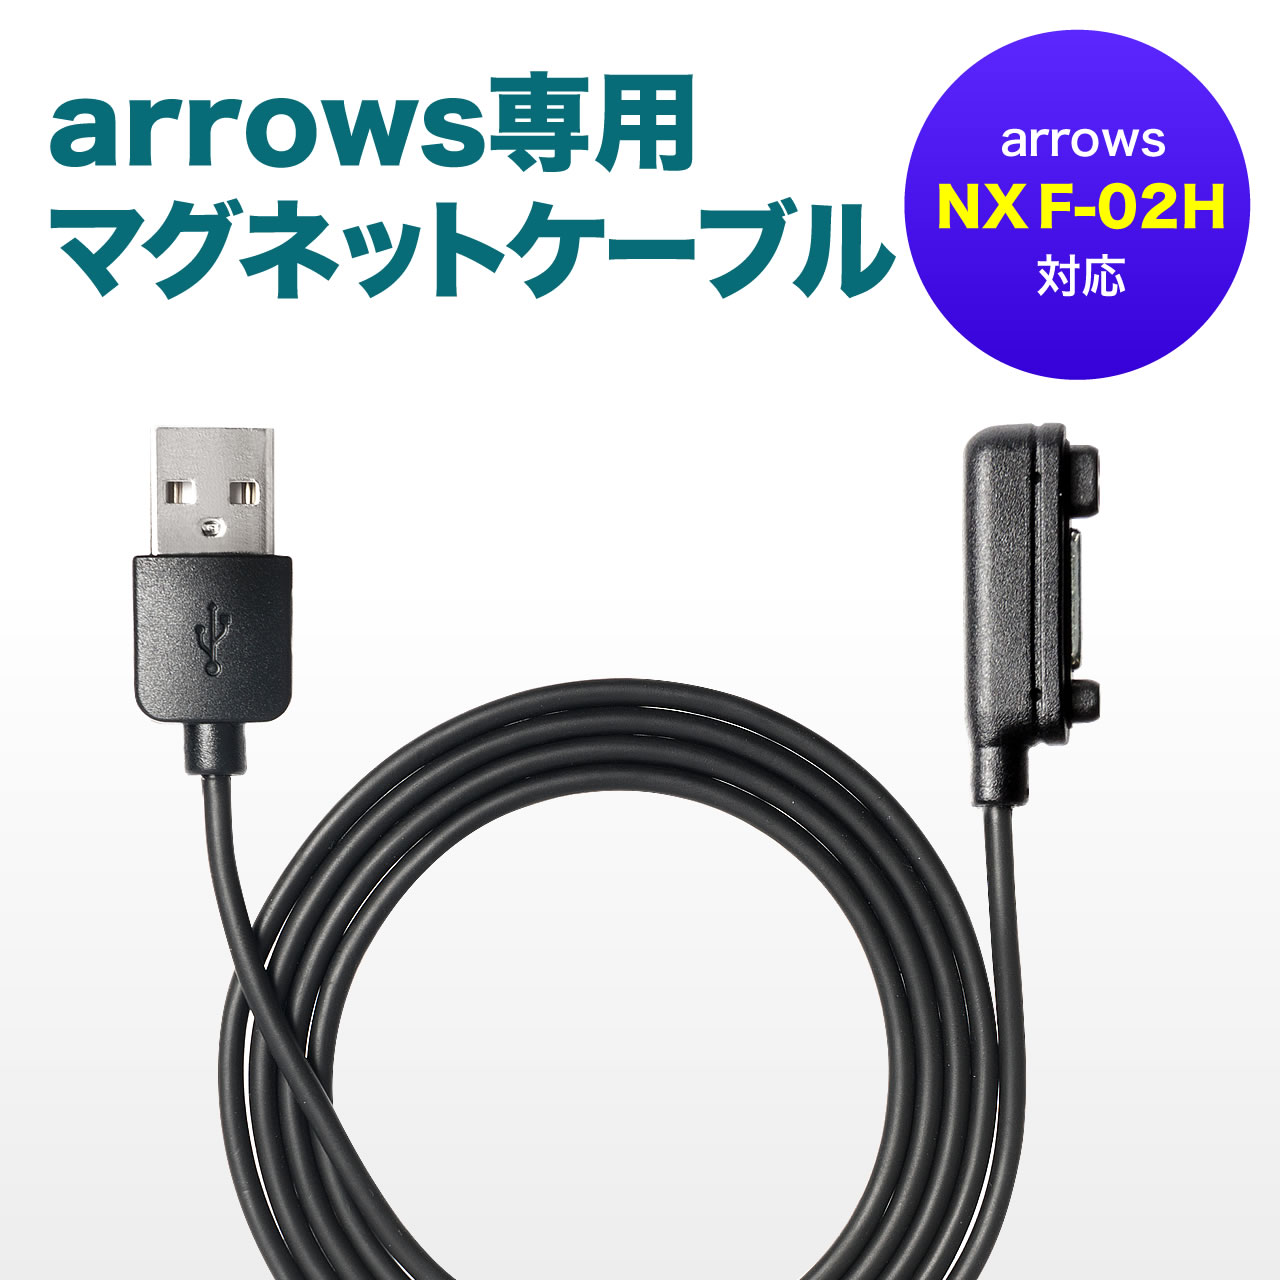 arrowsp}Olbg[dP[u(arrows NX F-02HpEUSB[dEP[u1mEubNj 500-USB041